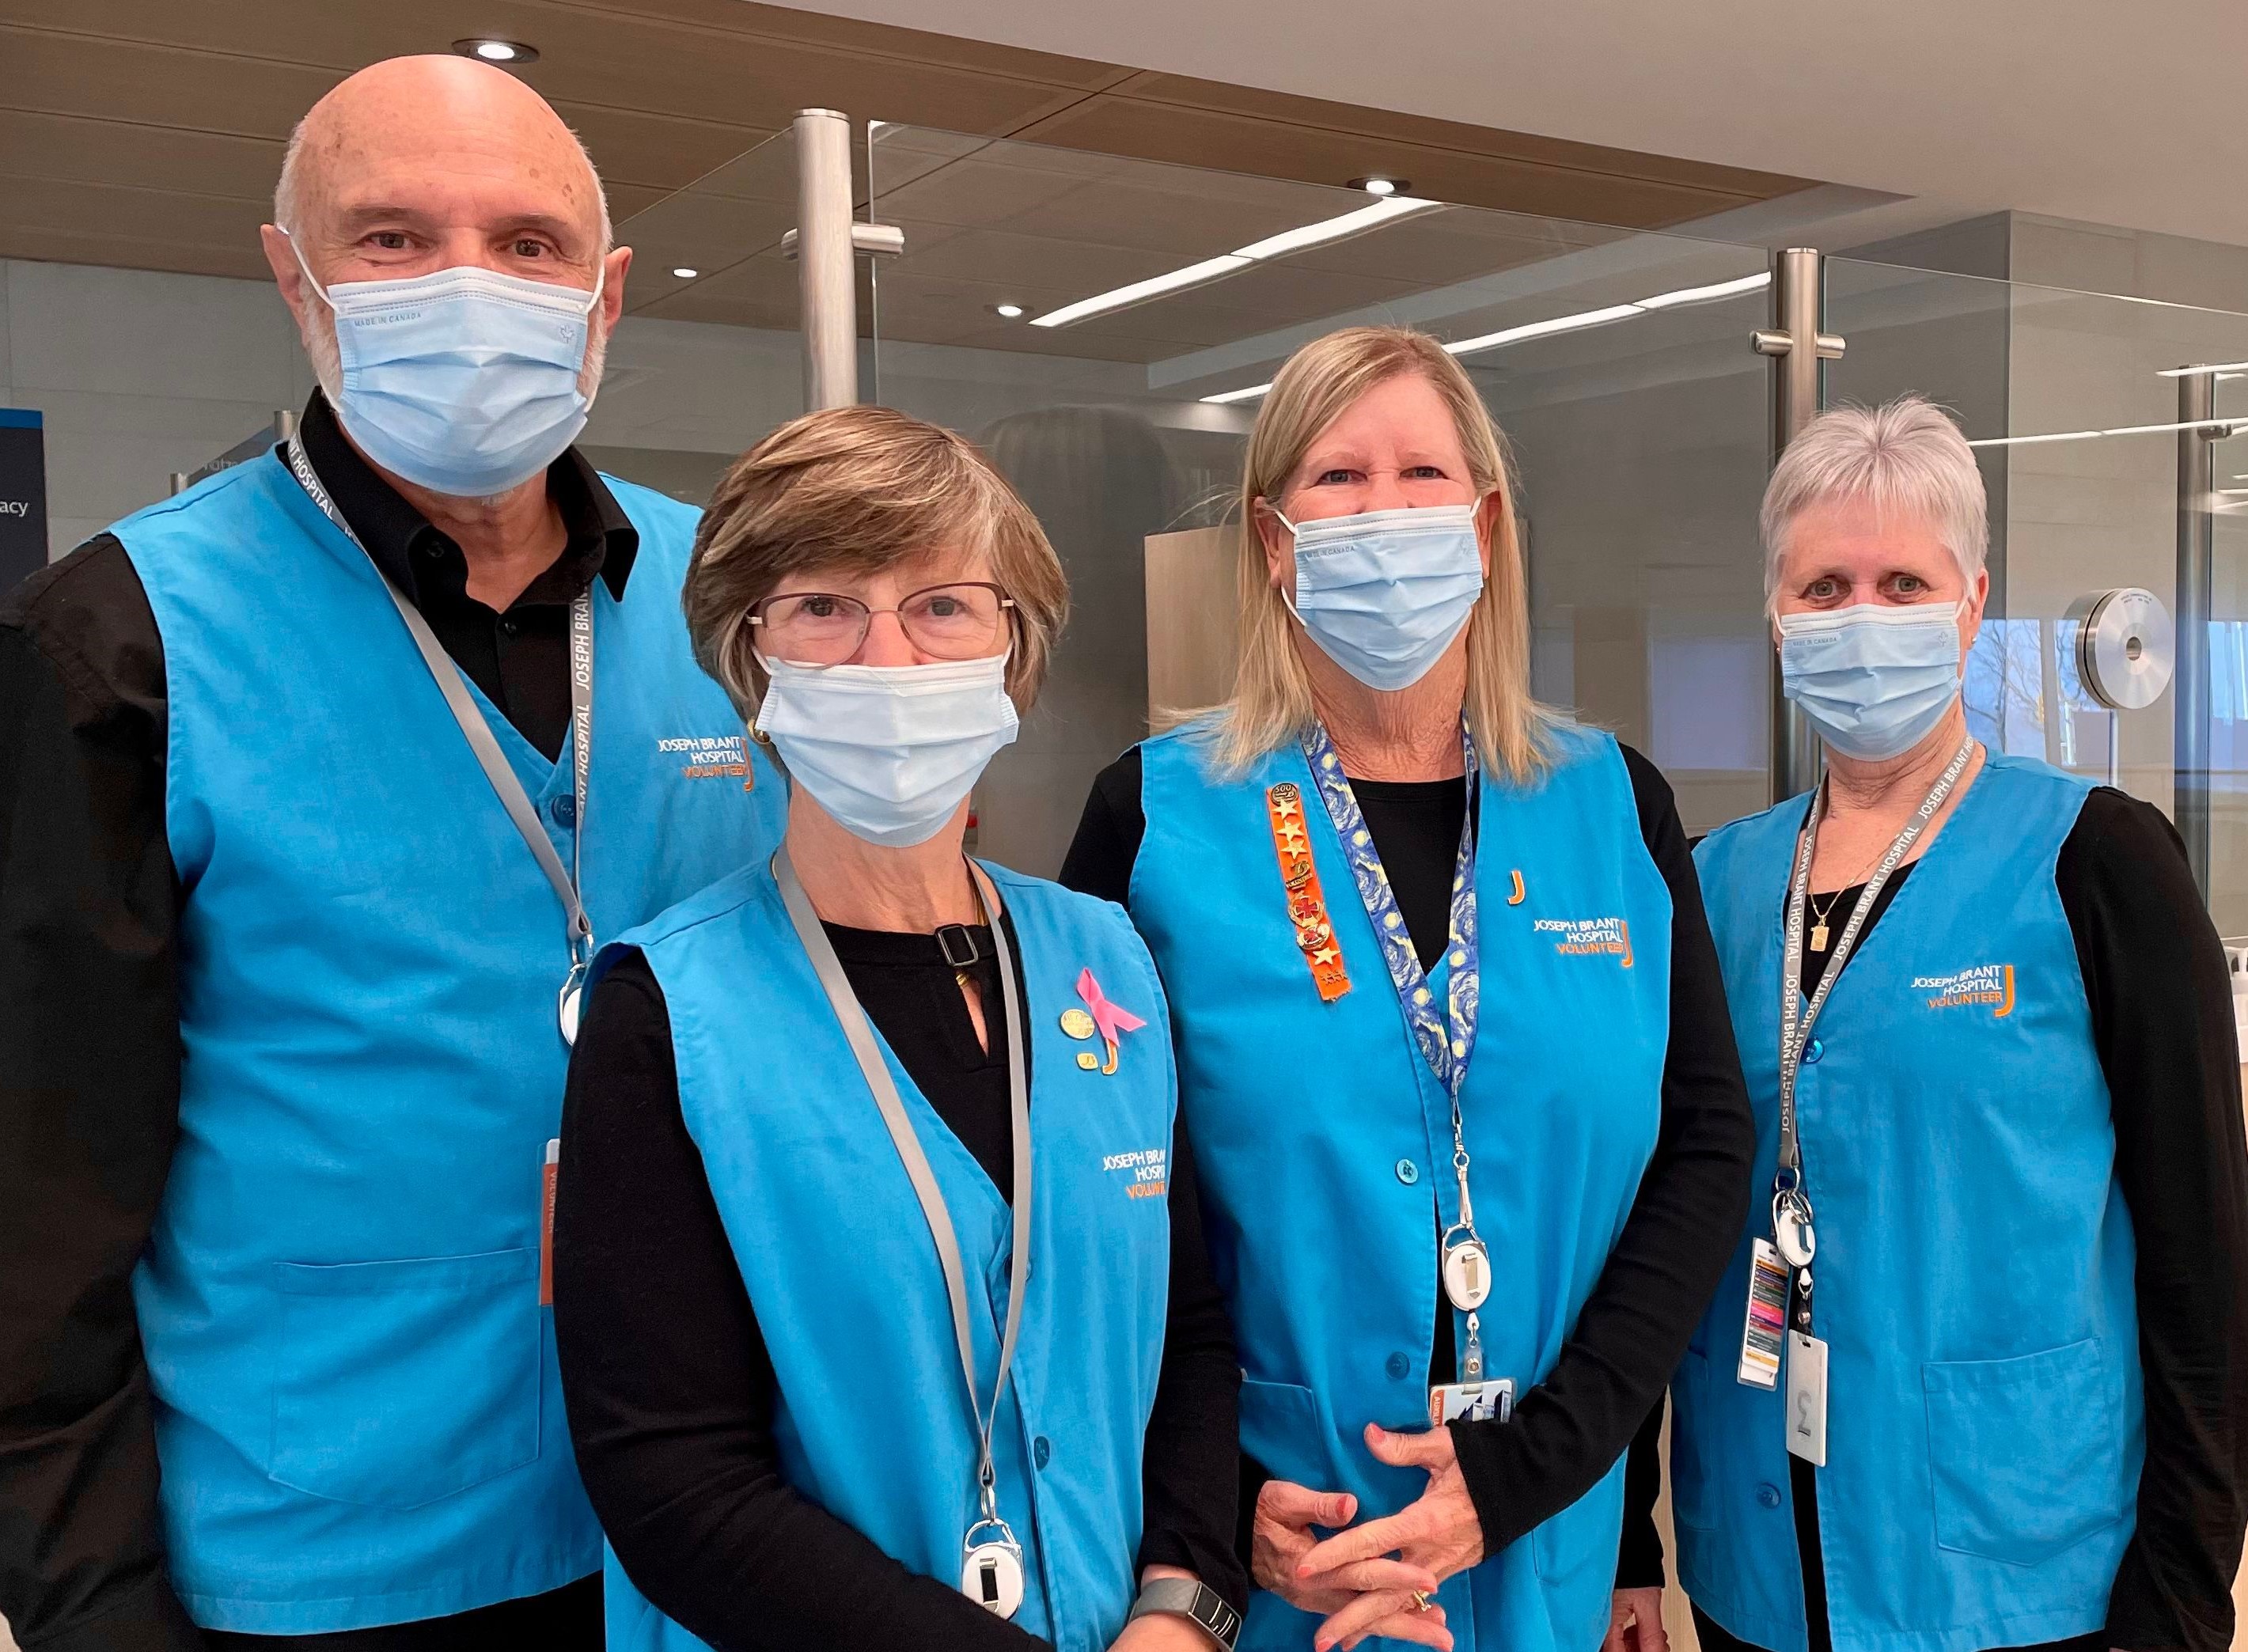 Group photo of four CARE ambassadors wearing blue volunteer vests and masks. 